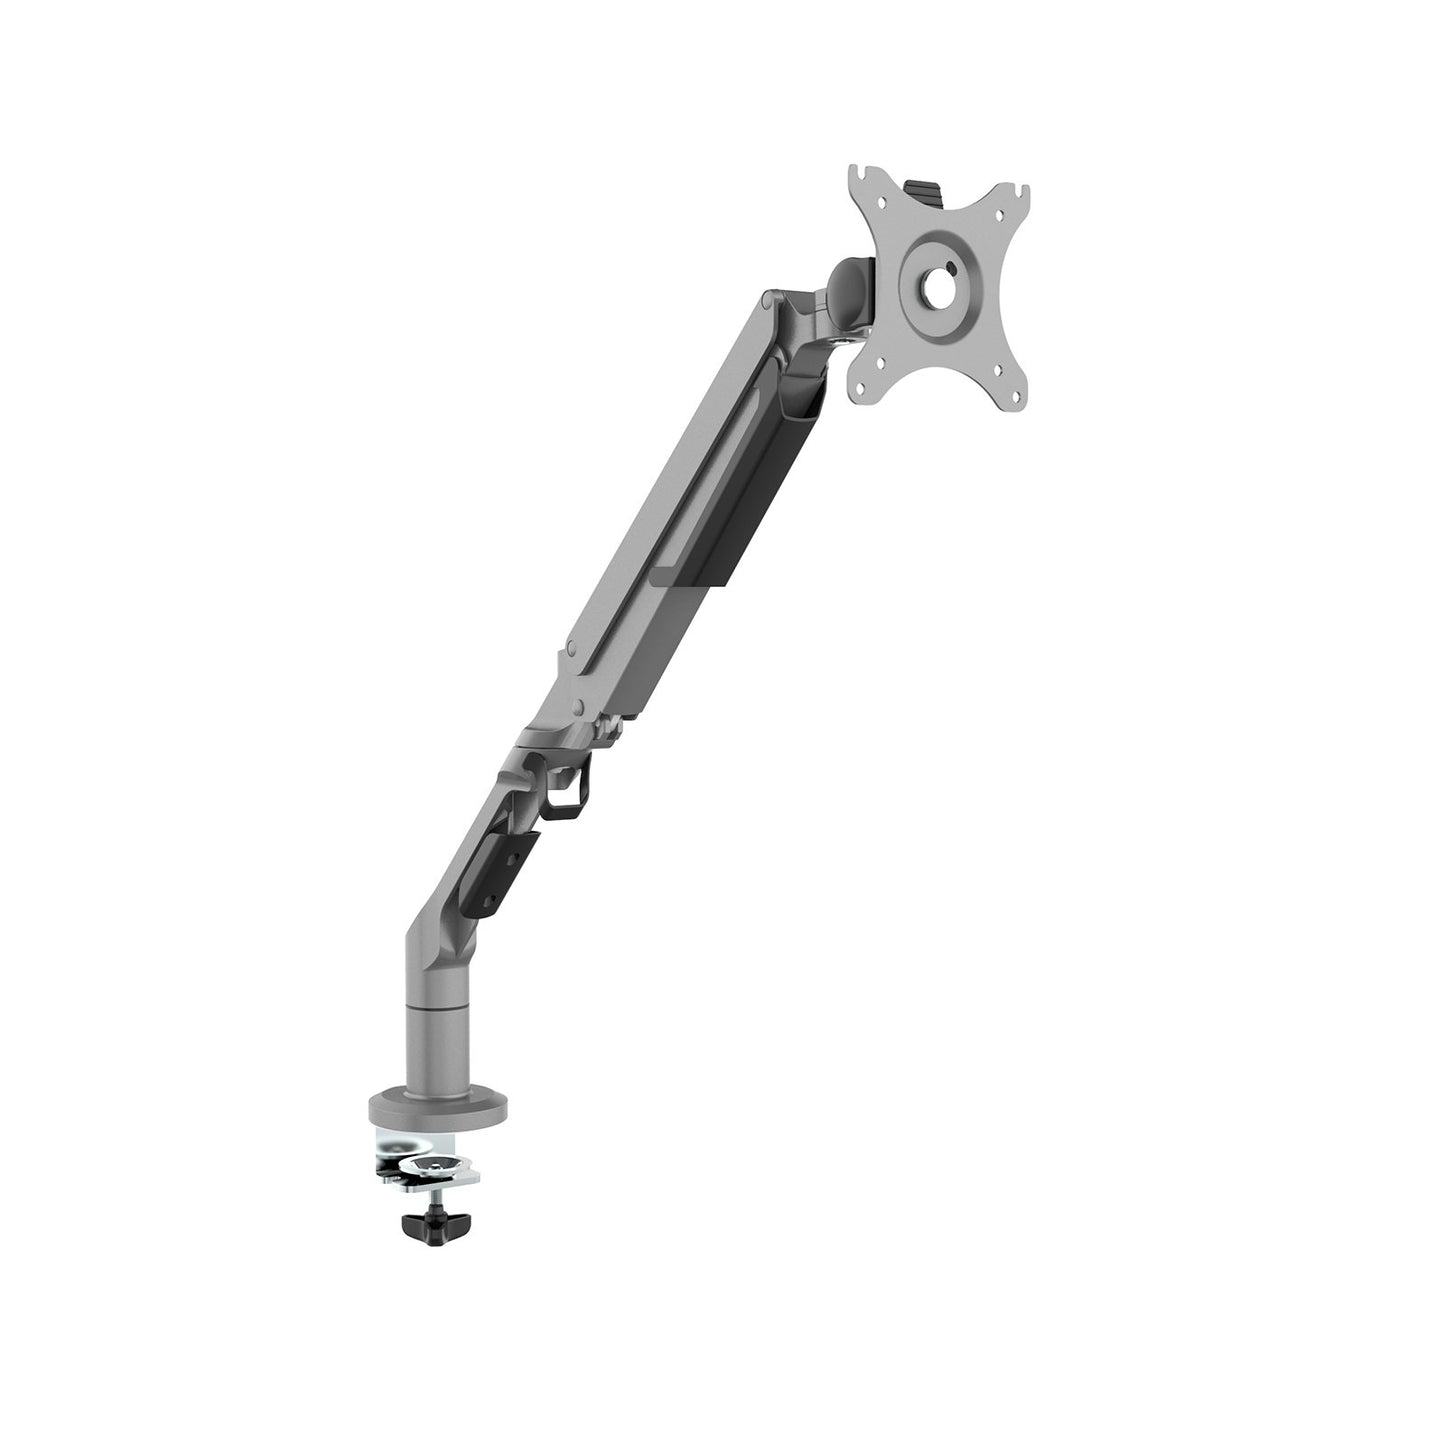 Triton gas lift single monitor arm